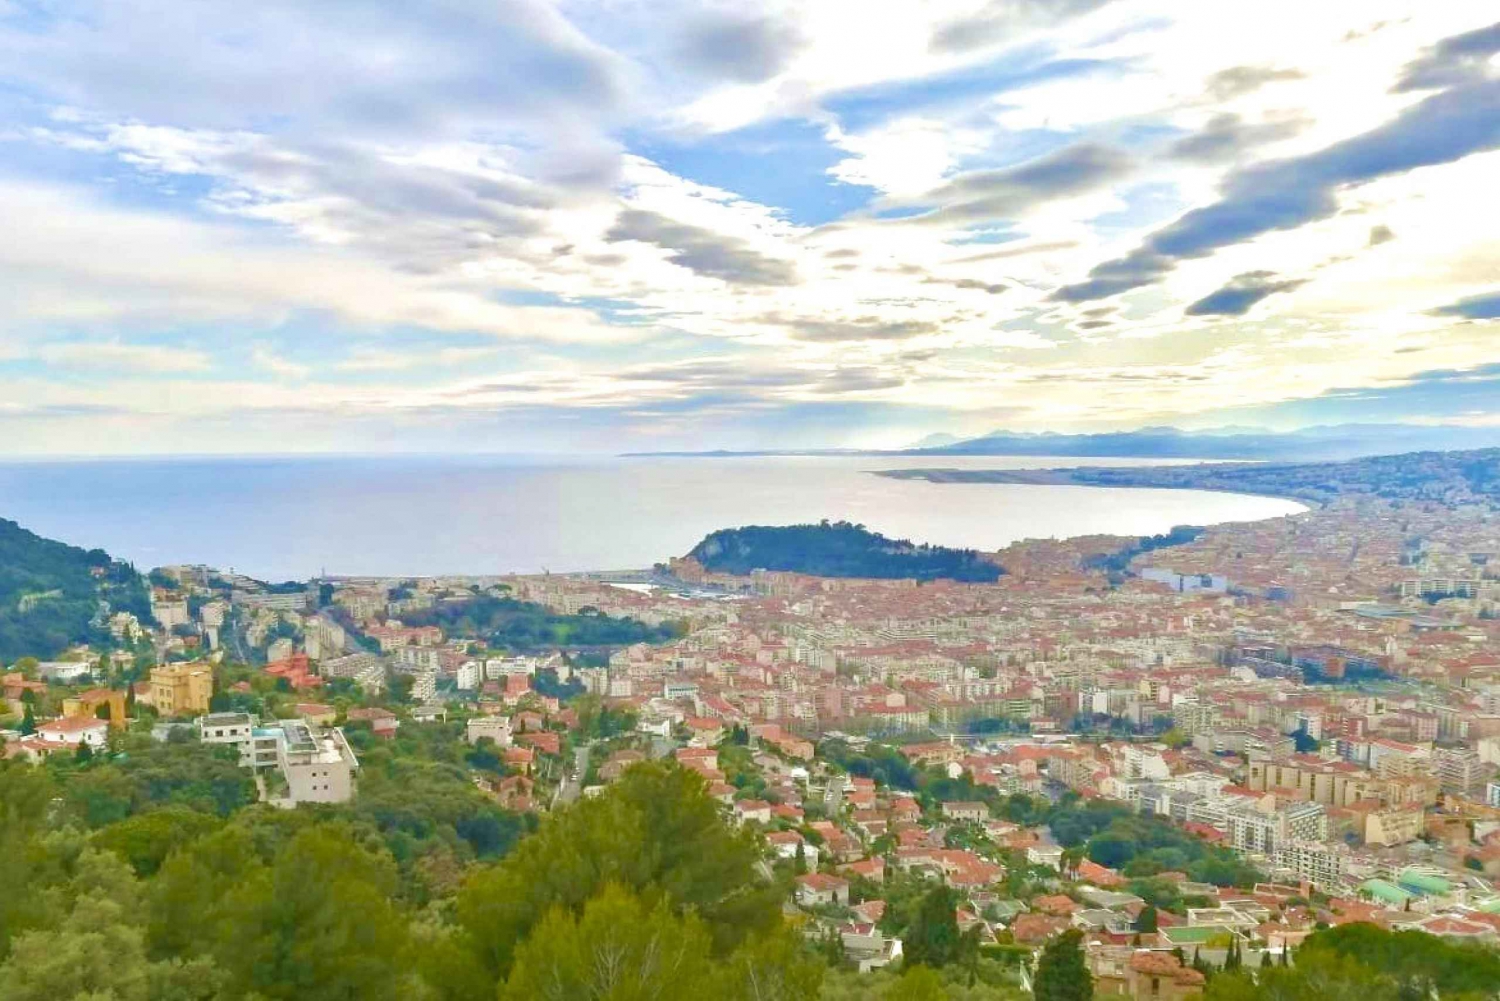 E-Bike Tour : Great Panoramic French Riviera